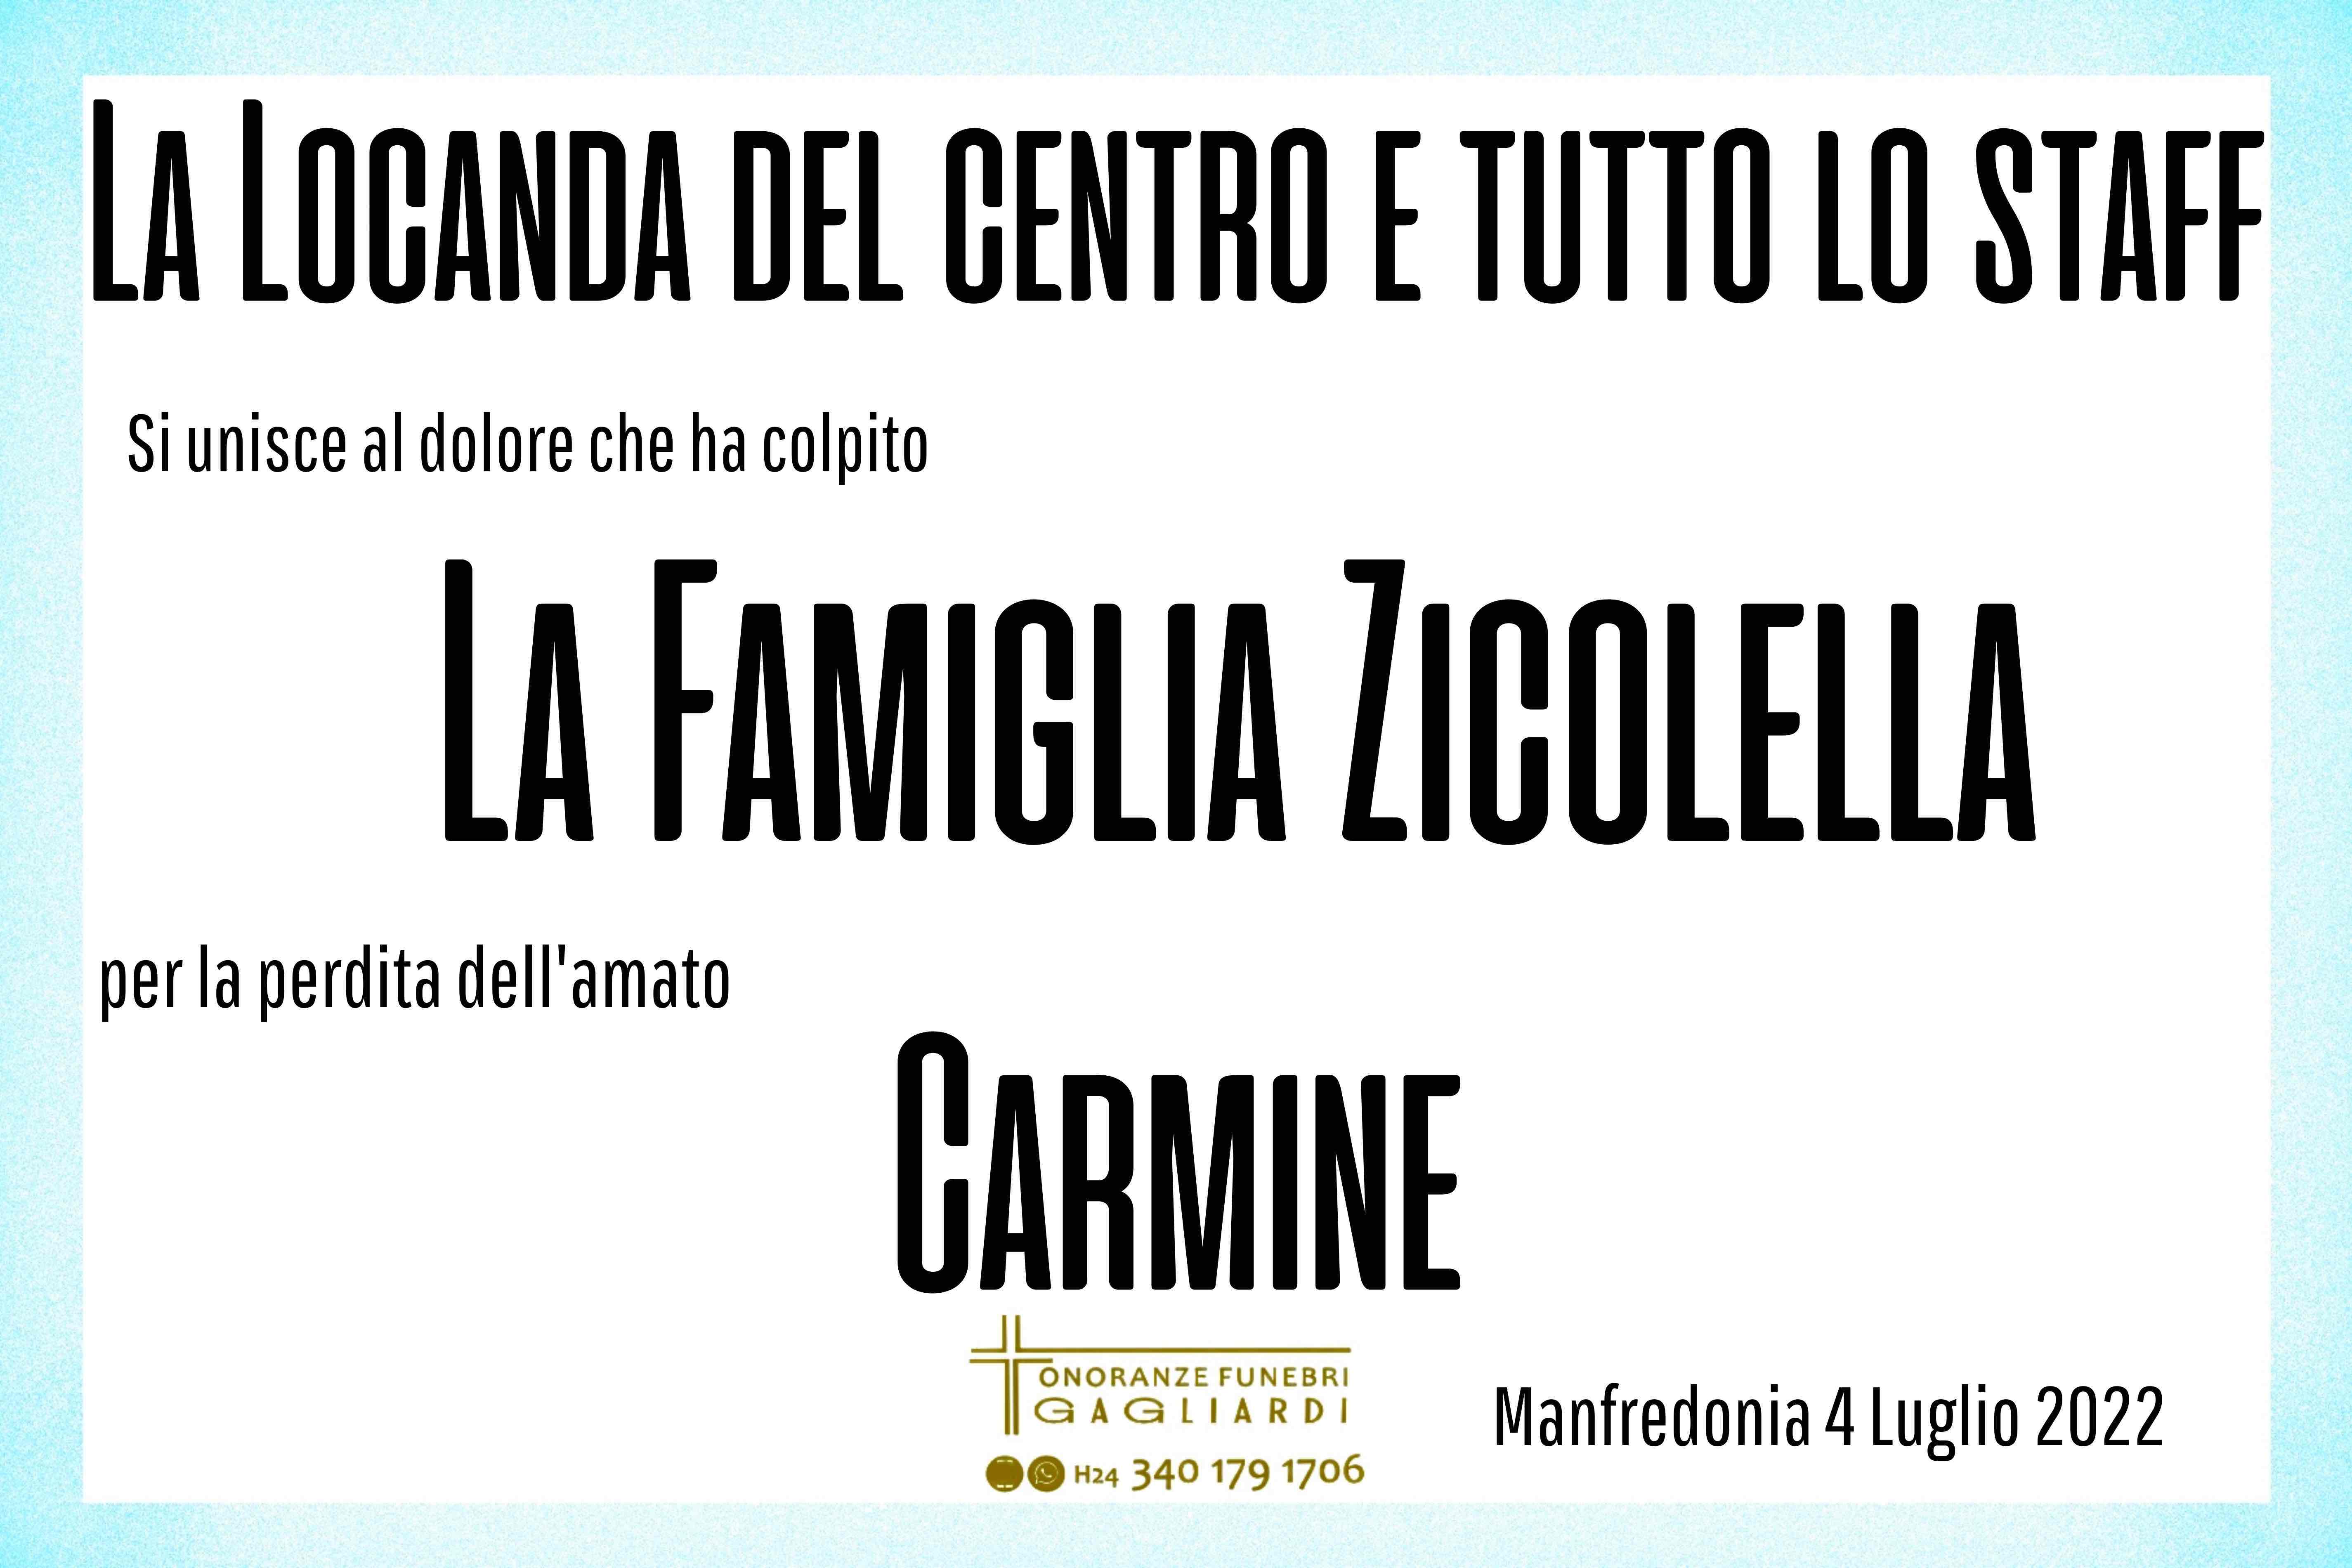 Carmine Zicolella